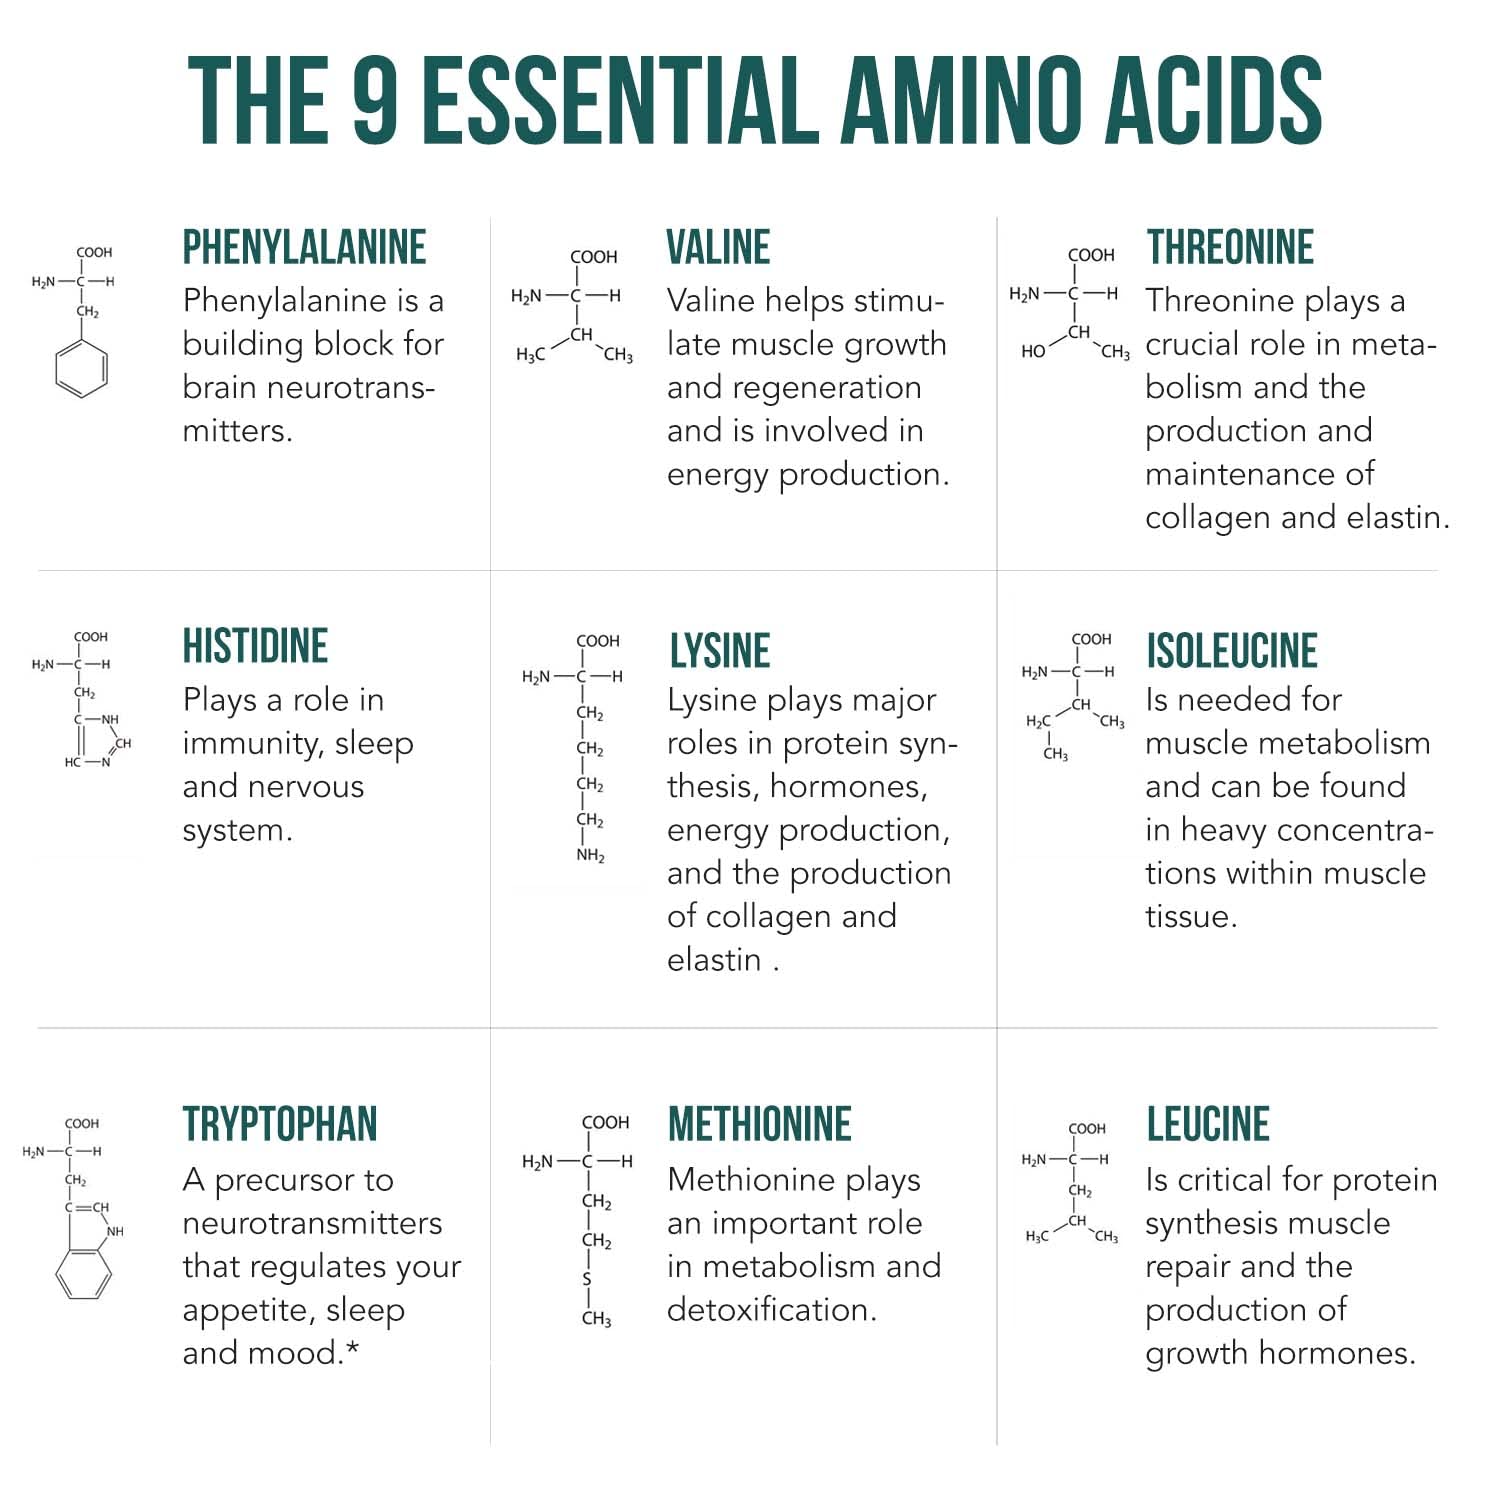 Plant Aminos Organic Essential Amino Acids (EAAs) & BCAA - 100% Plant-Based Raw, Vegan - All 9 Essential Amino Acids with 18 Total Amino Acids (360 Tablets)